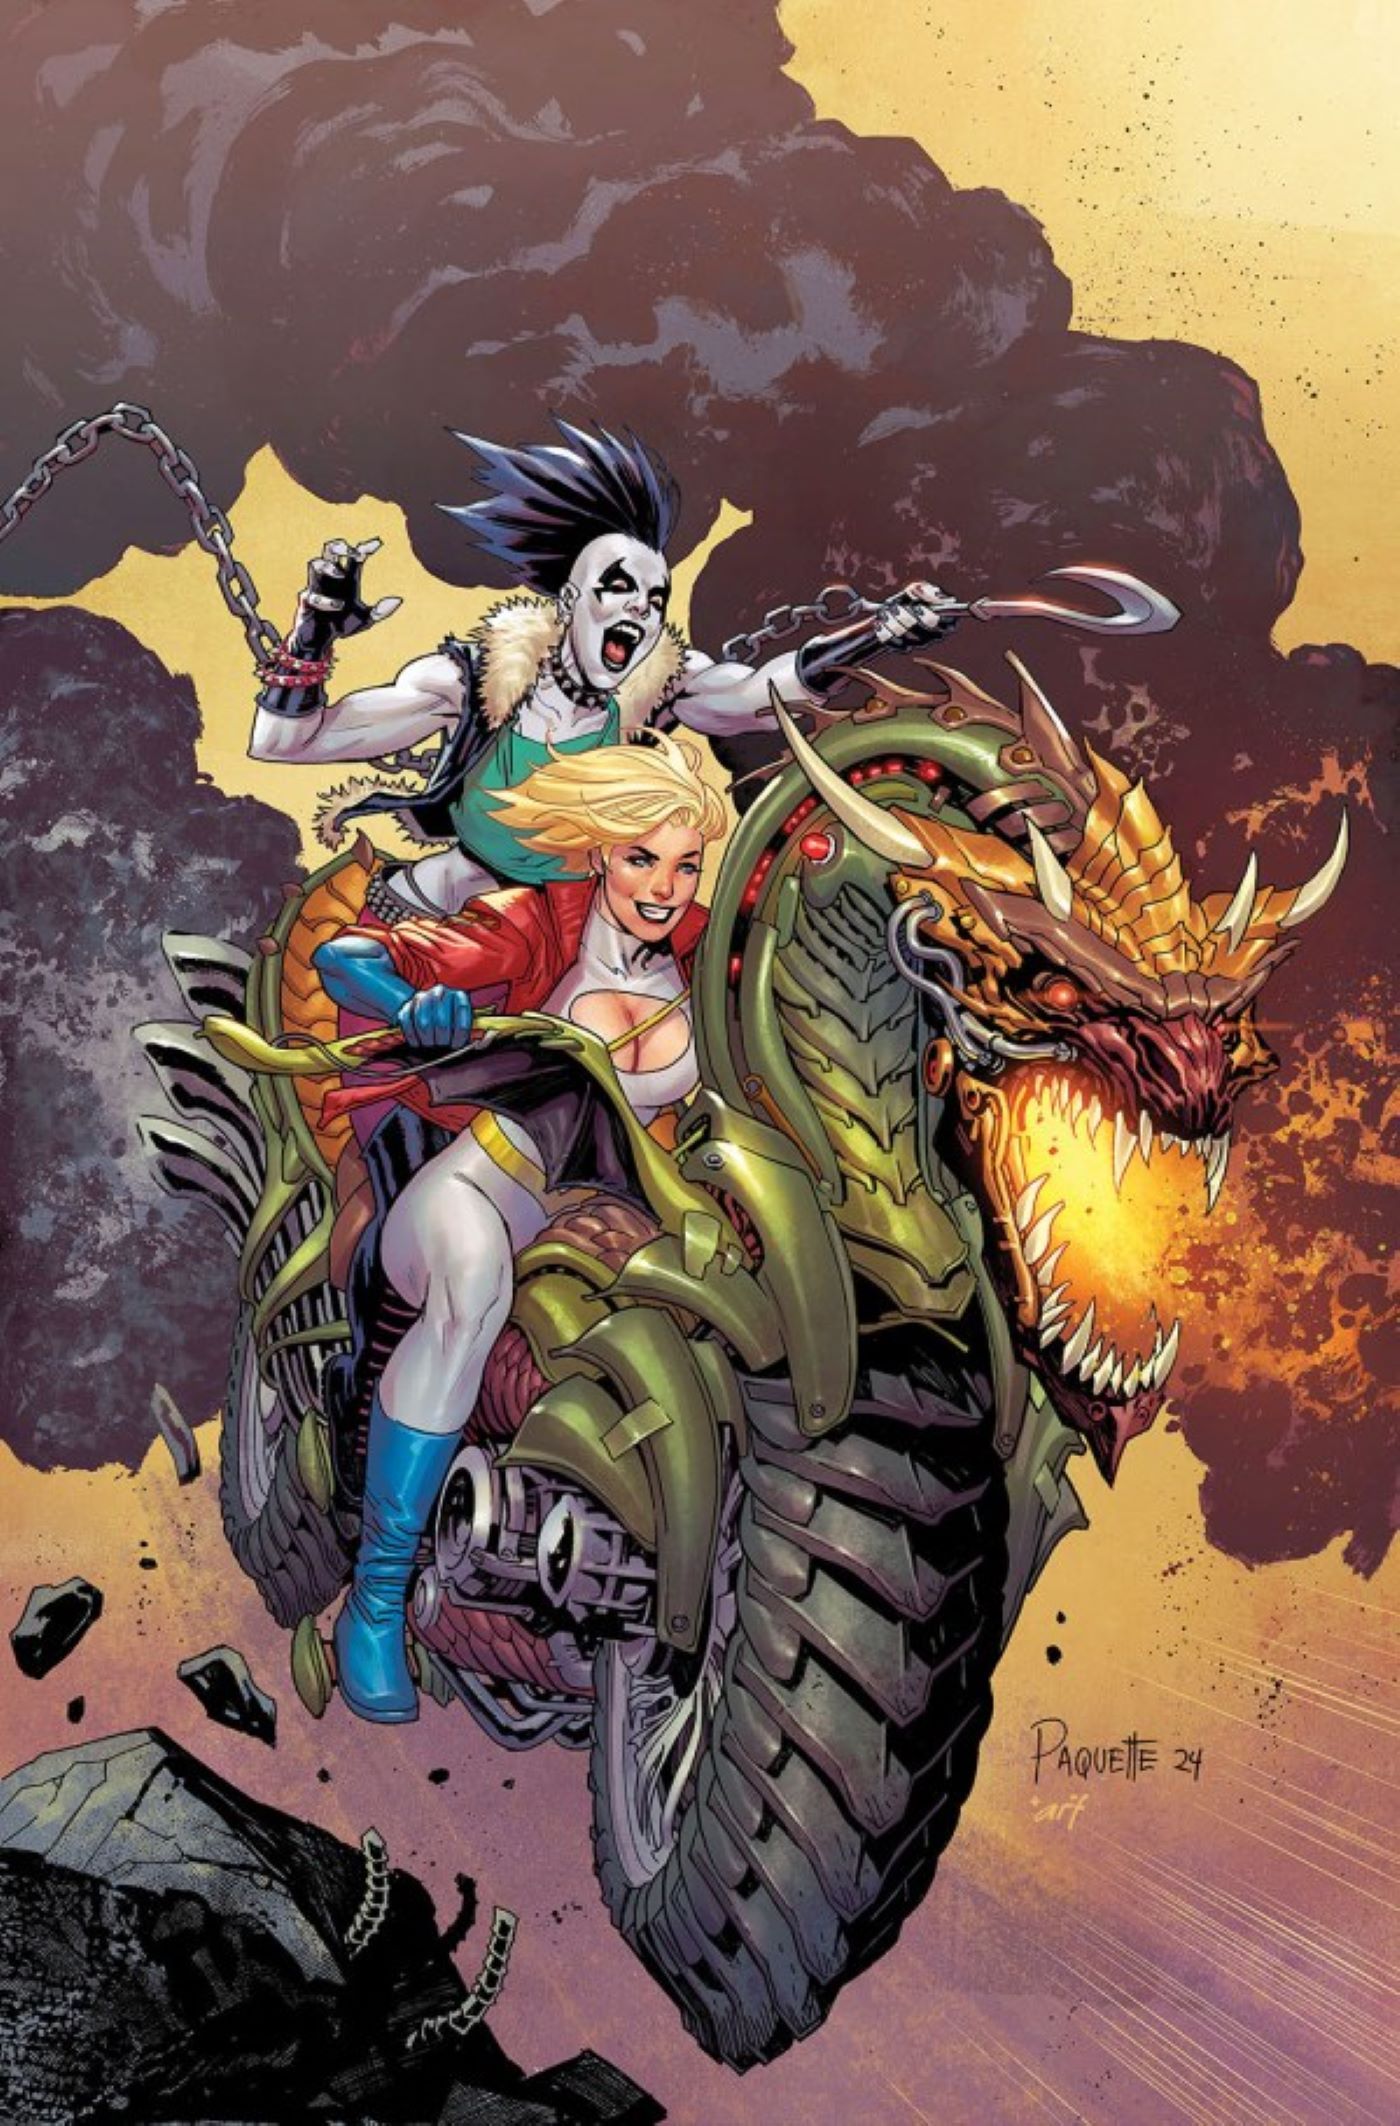 Capa da Power Girl #10 apresentando Crush e Paige andando de moto.